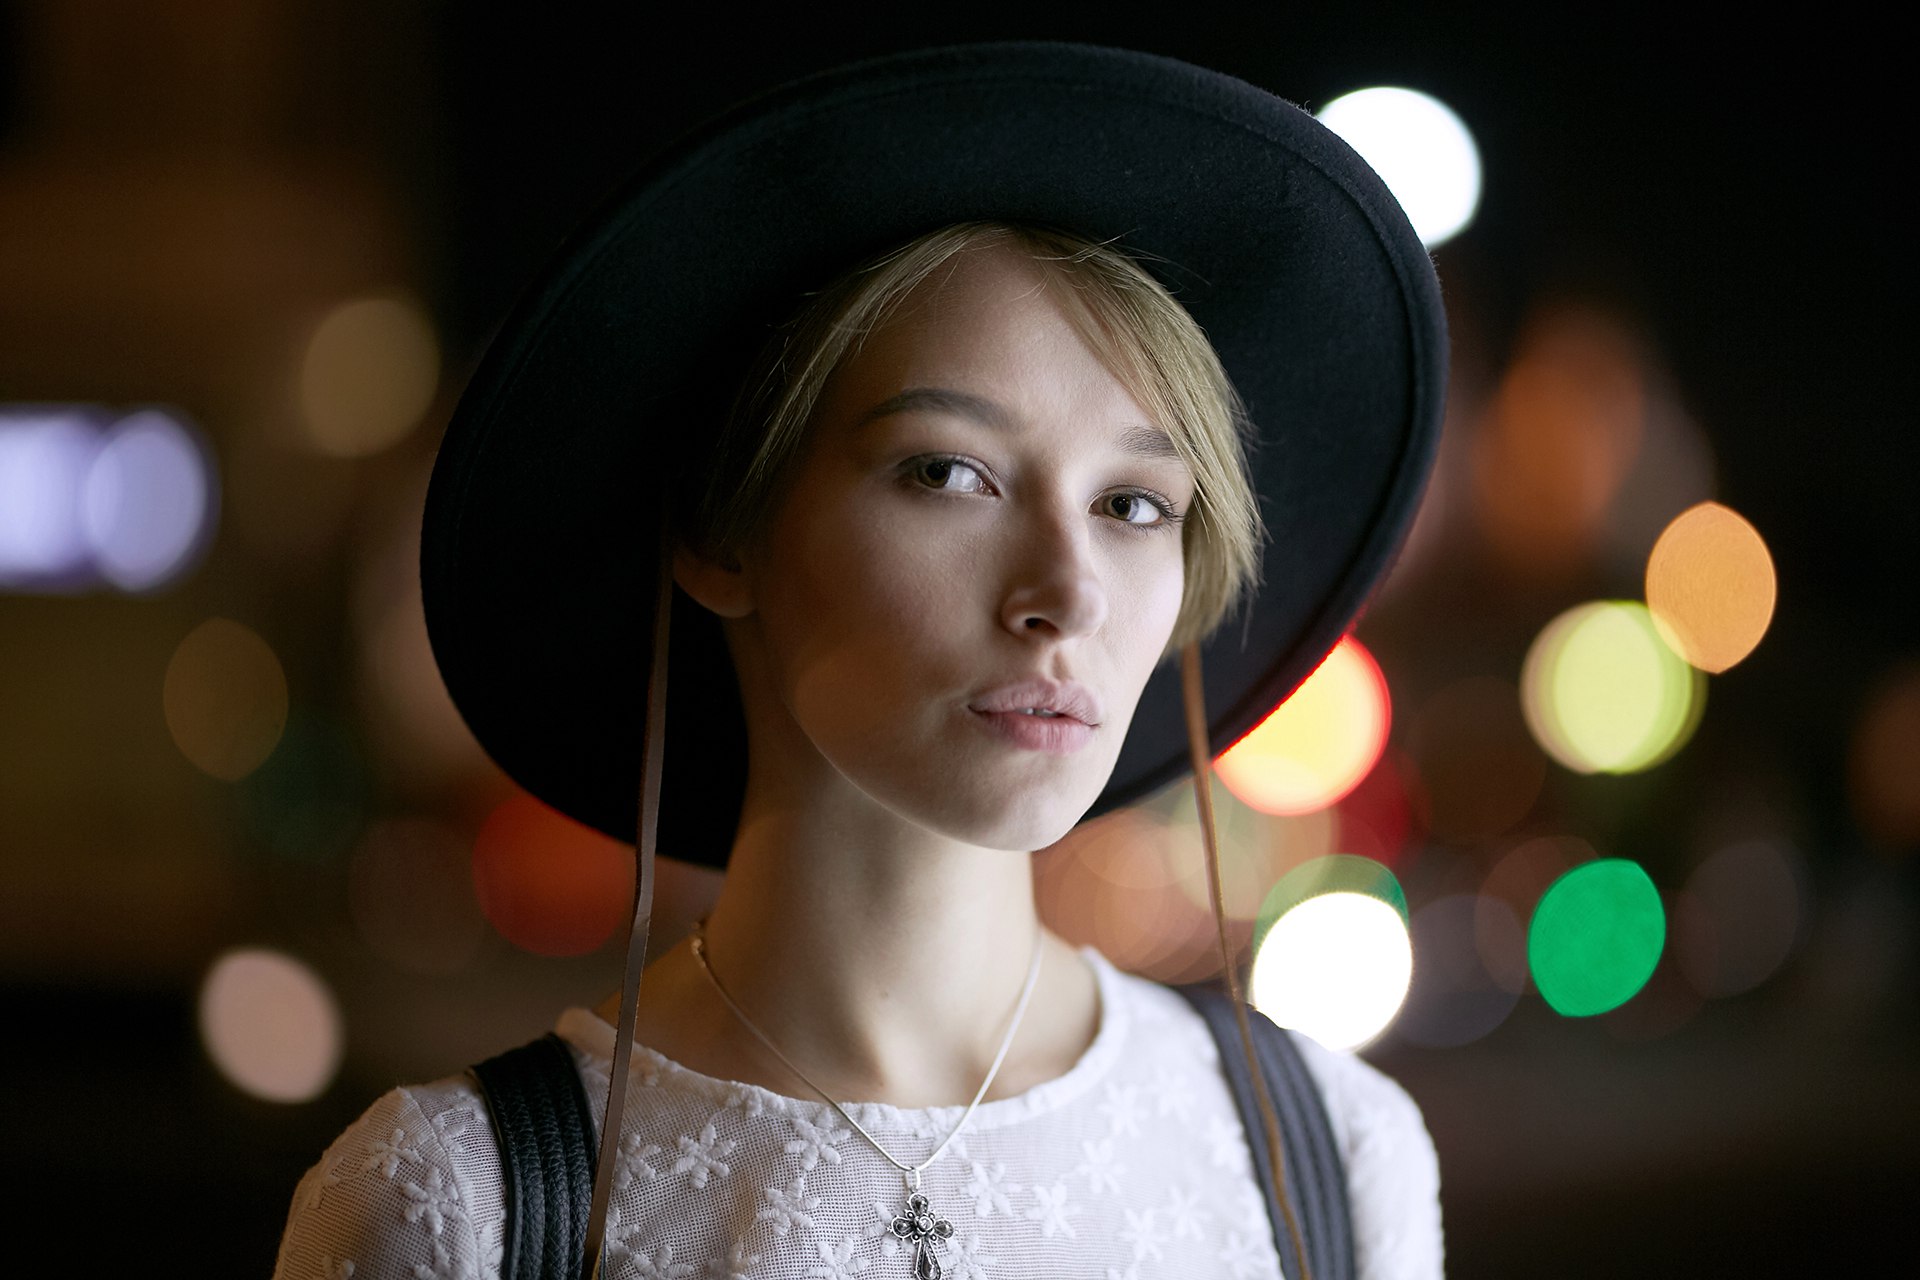 Women Russian Women Russian Model Model Women Outdoors Face Blonde Cross Hat Black Hat